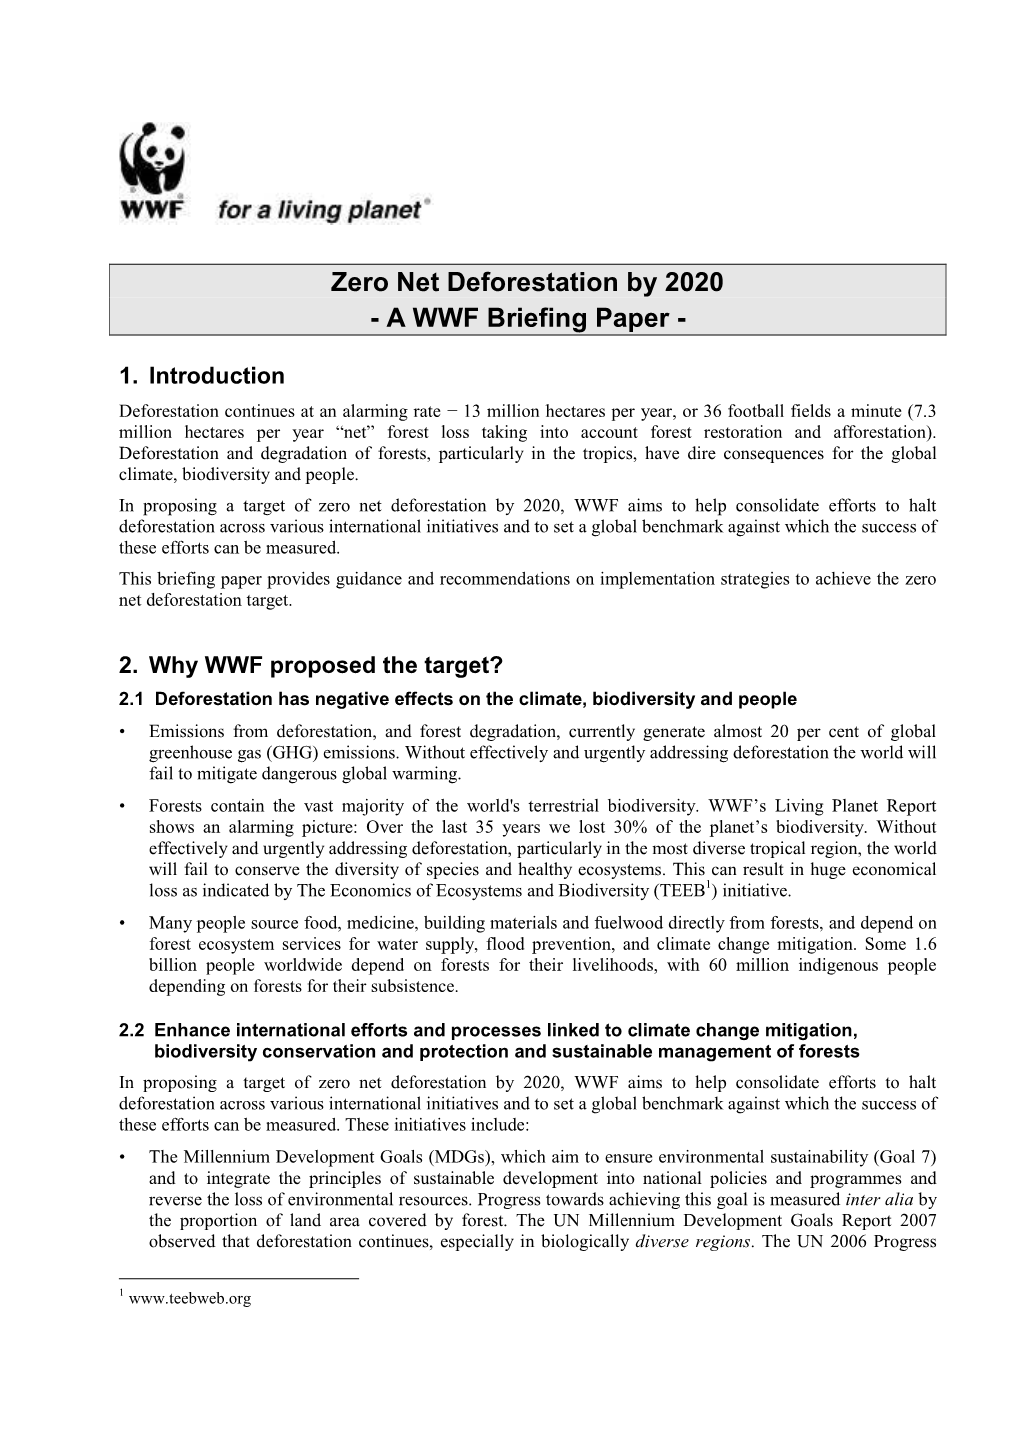 Zero Net Deforestation by 2020 - a WWF Briefing Paper